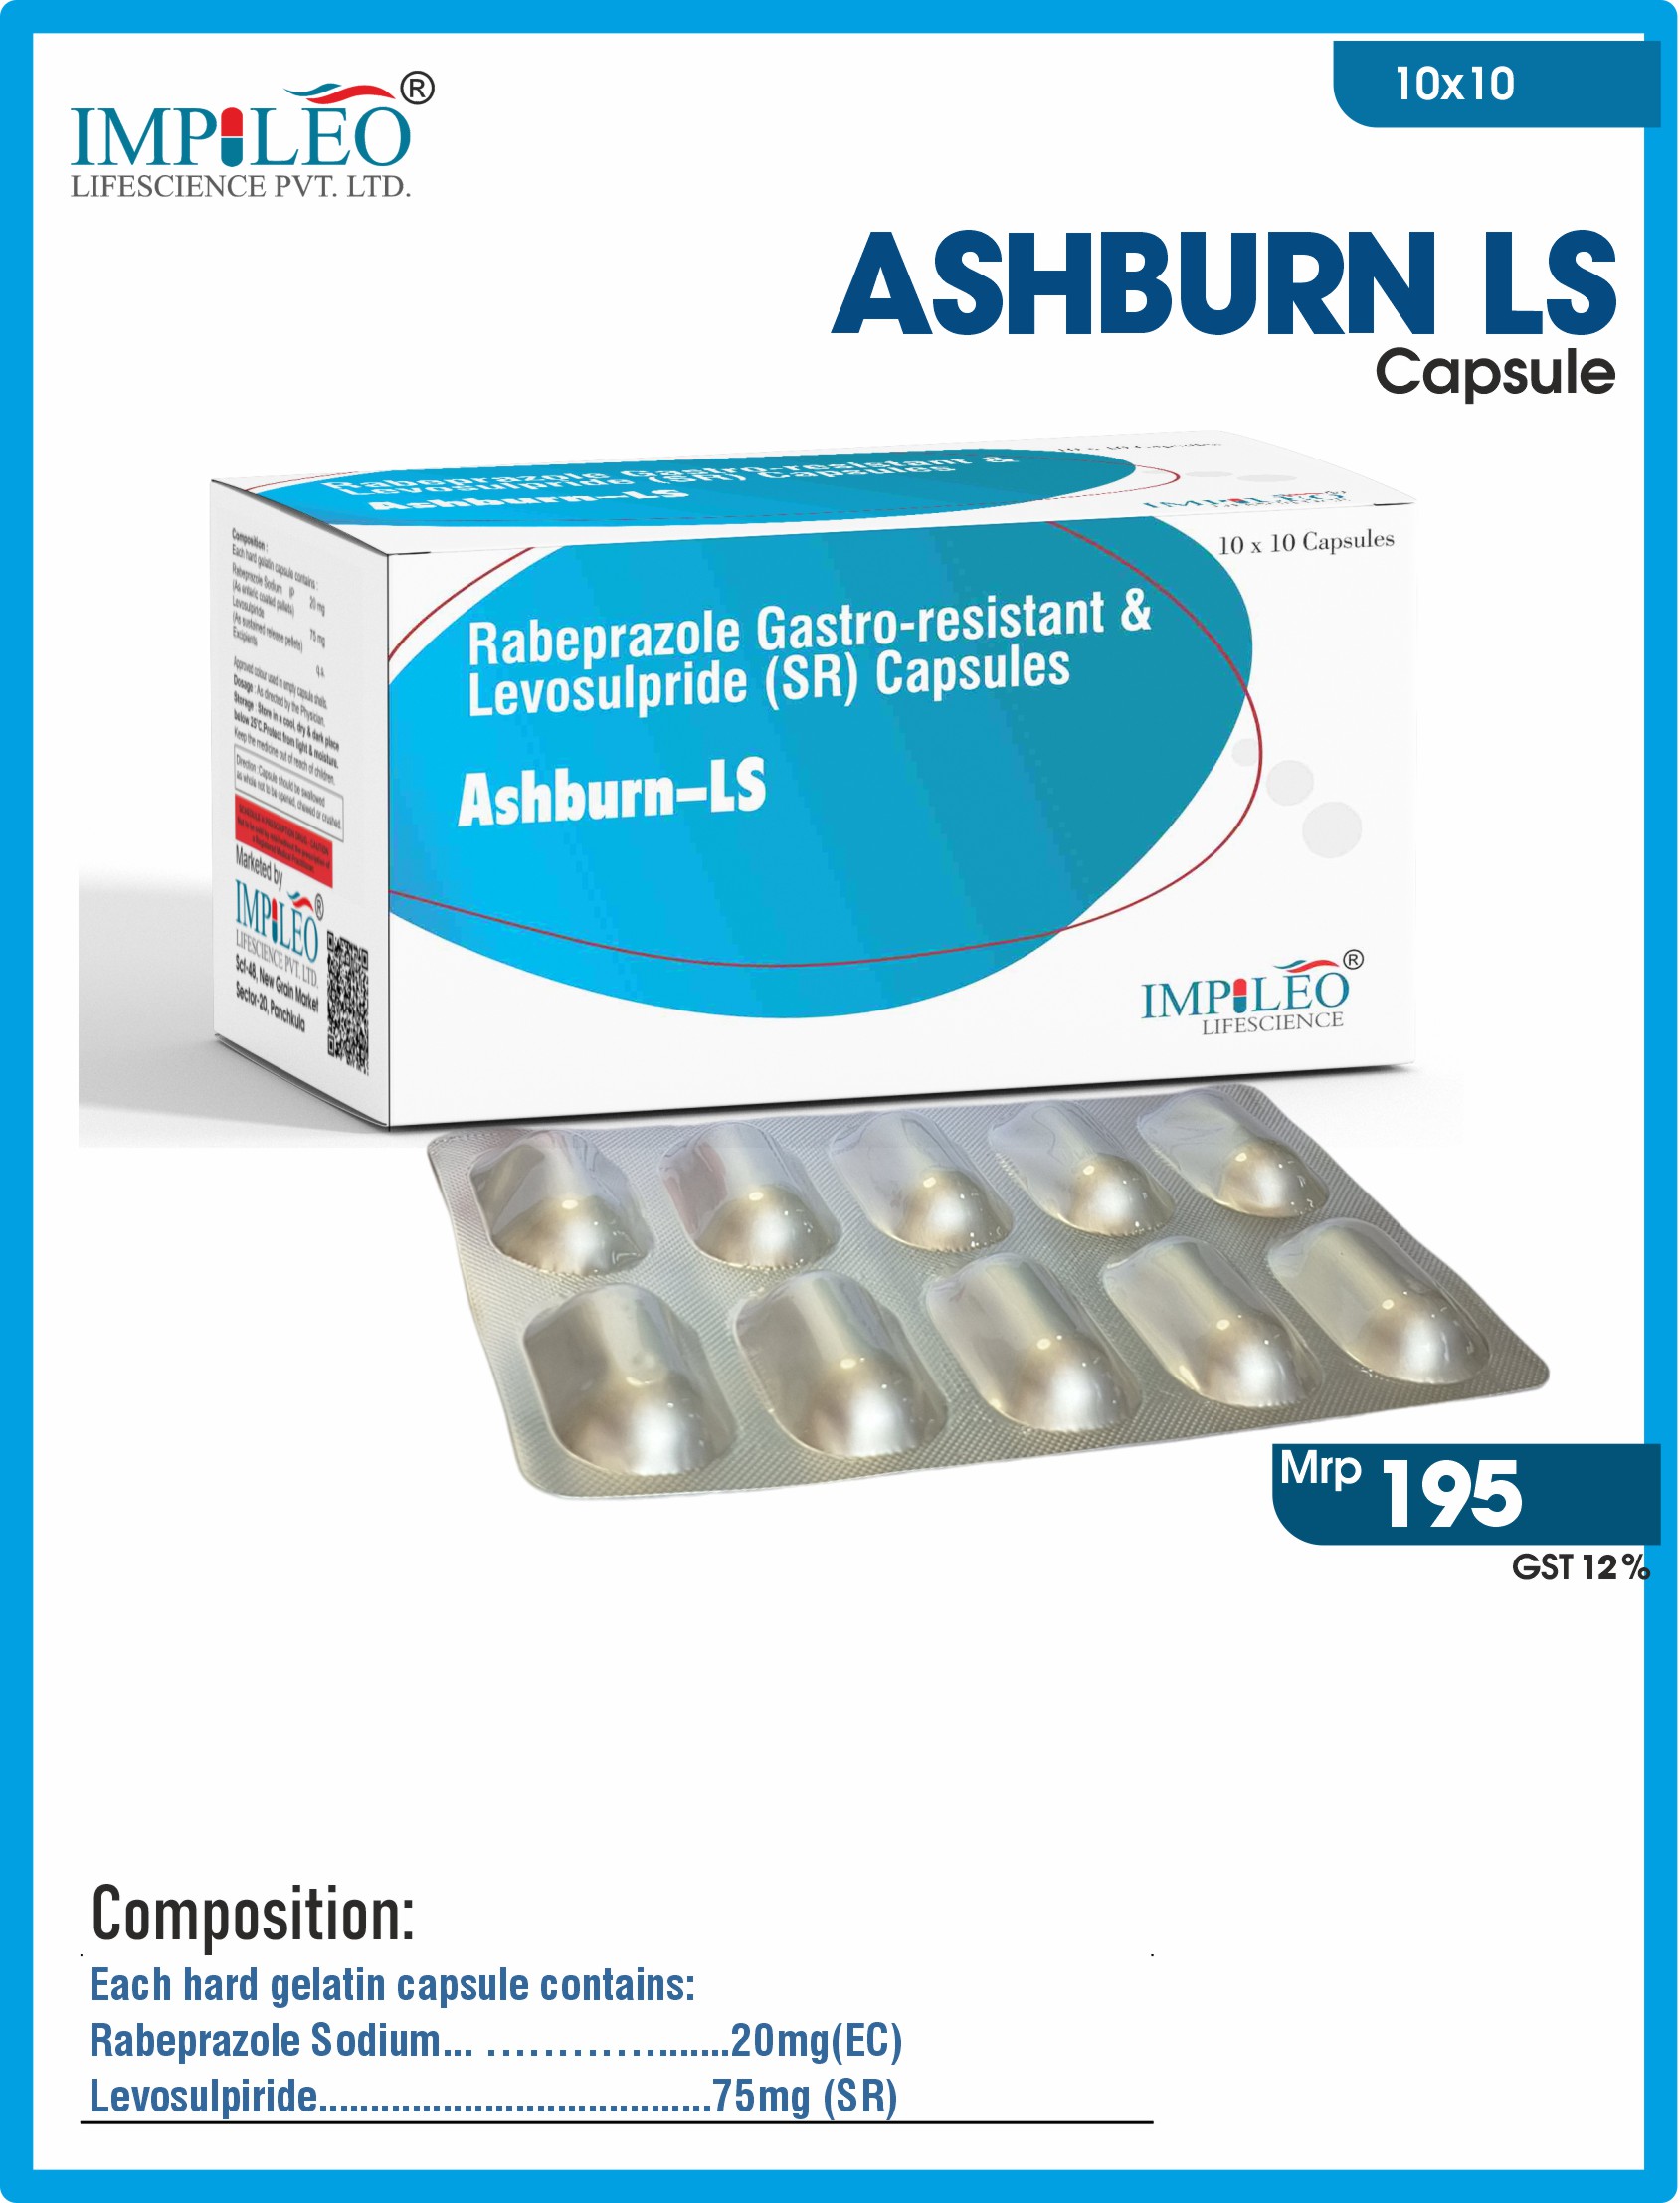 Grow Your Pharma Business : ASHBURN LS Capsule From PCD Pharma Franchise in Panchkula